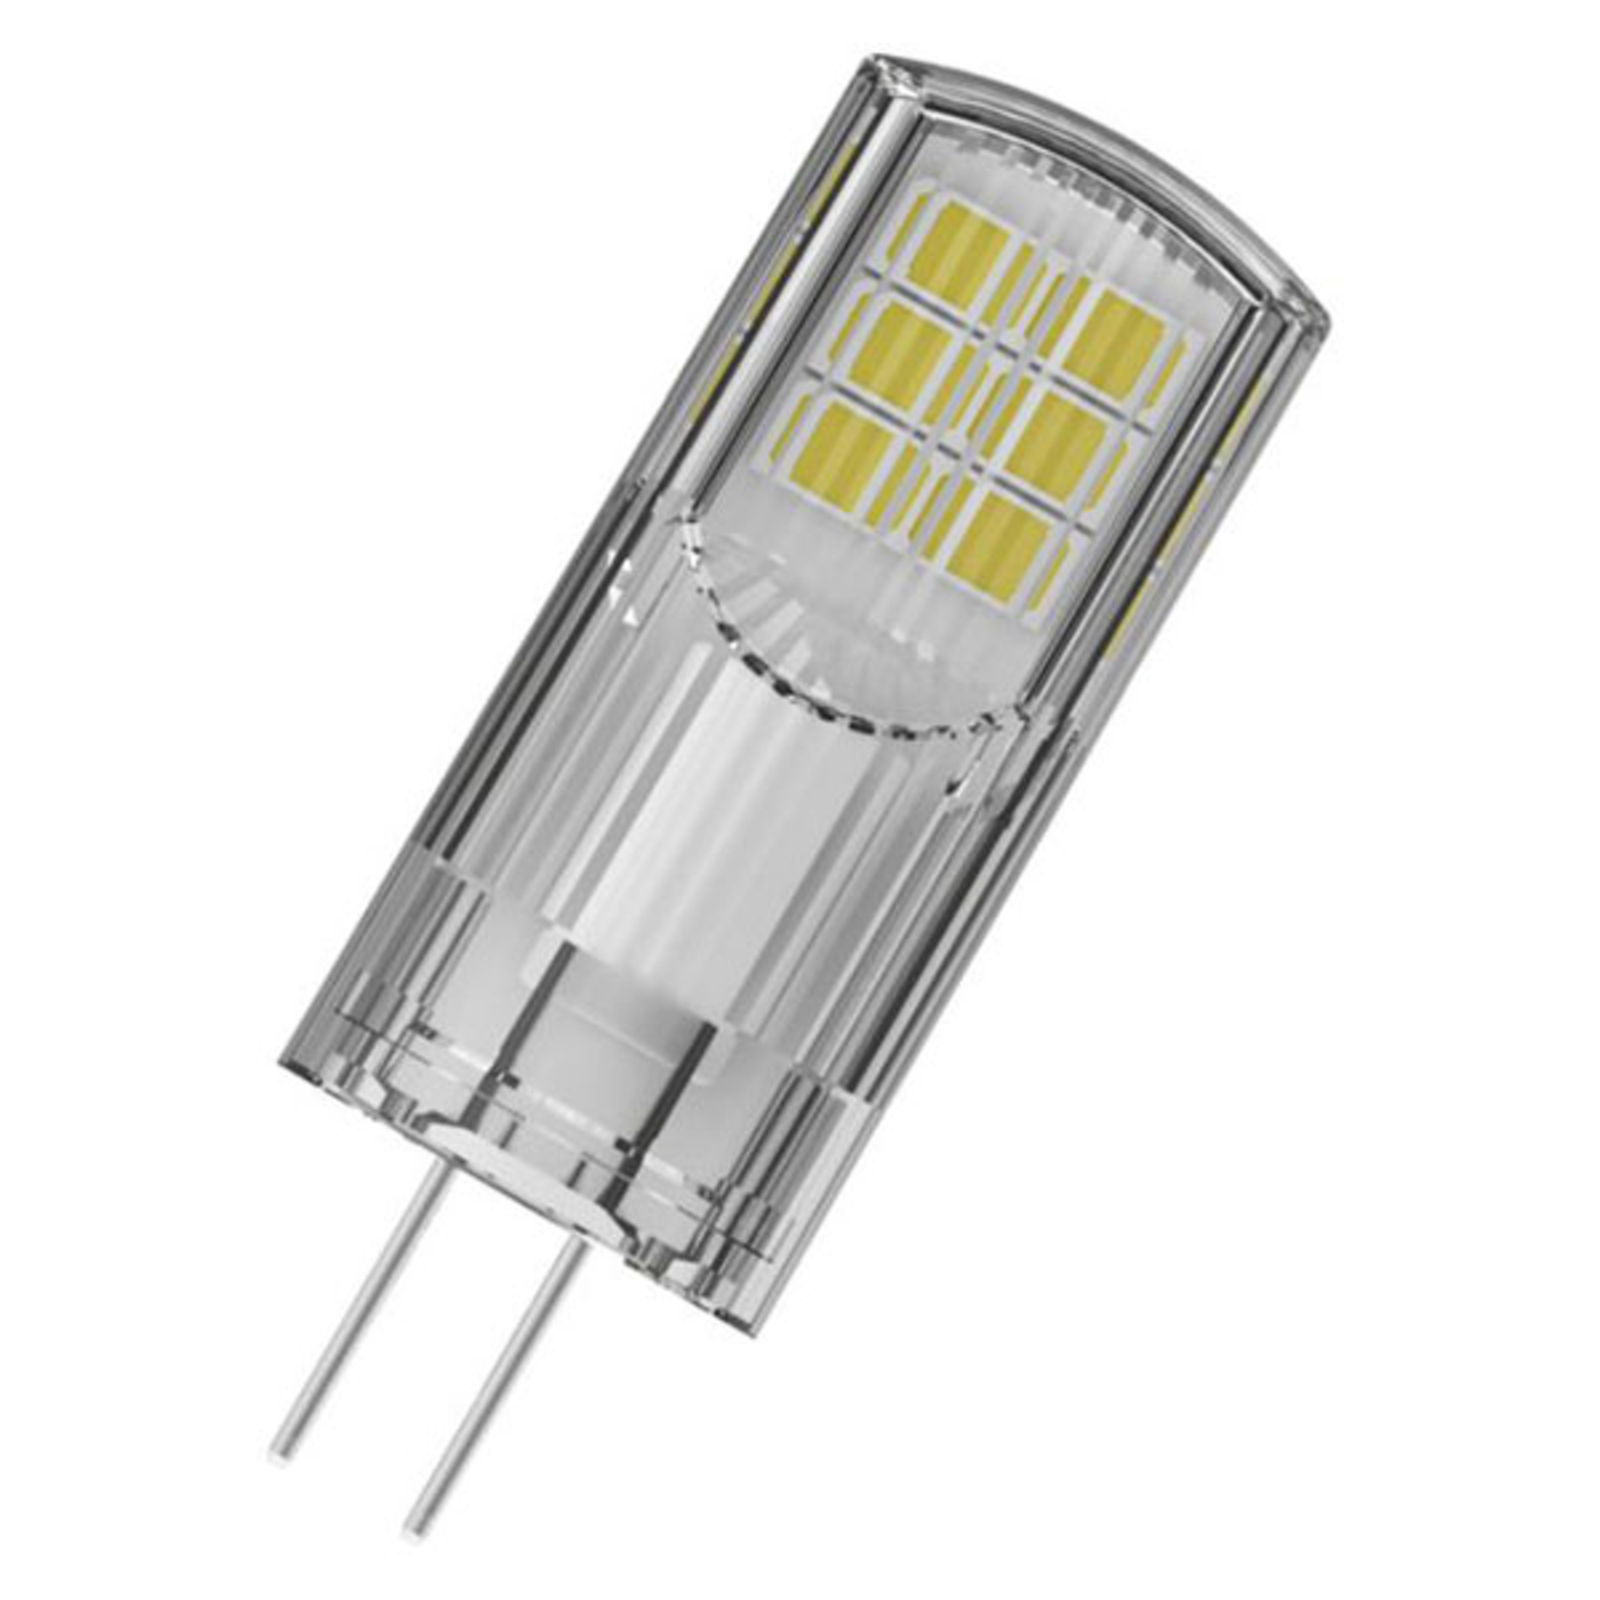 OSRAM ampoule broche LED G4 2,6W blanc chaud 300lm